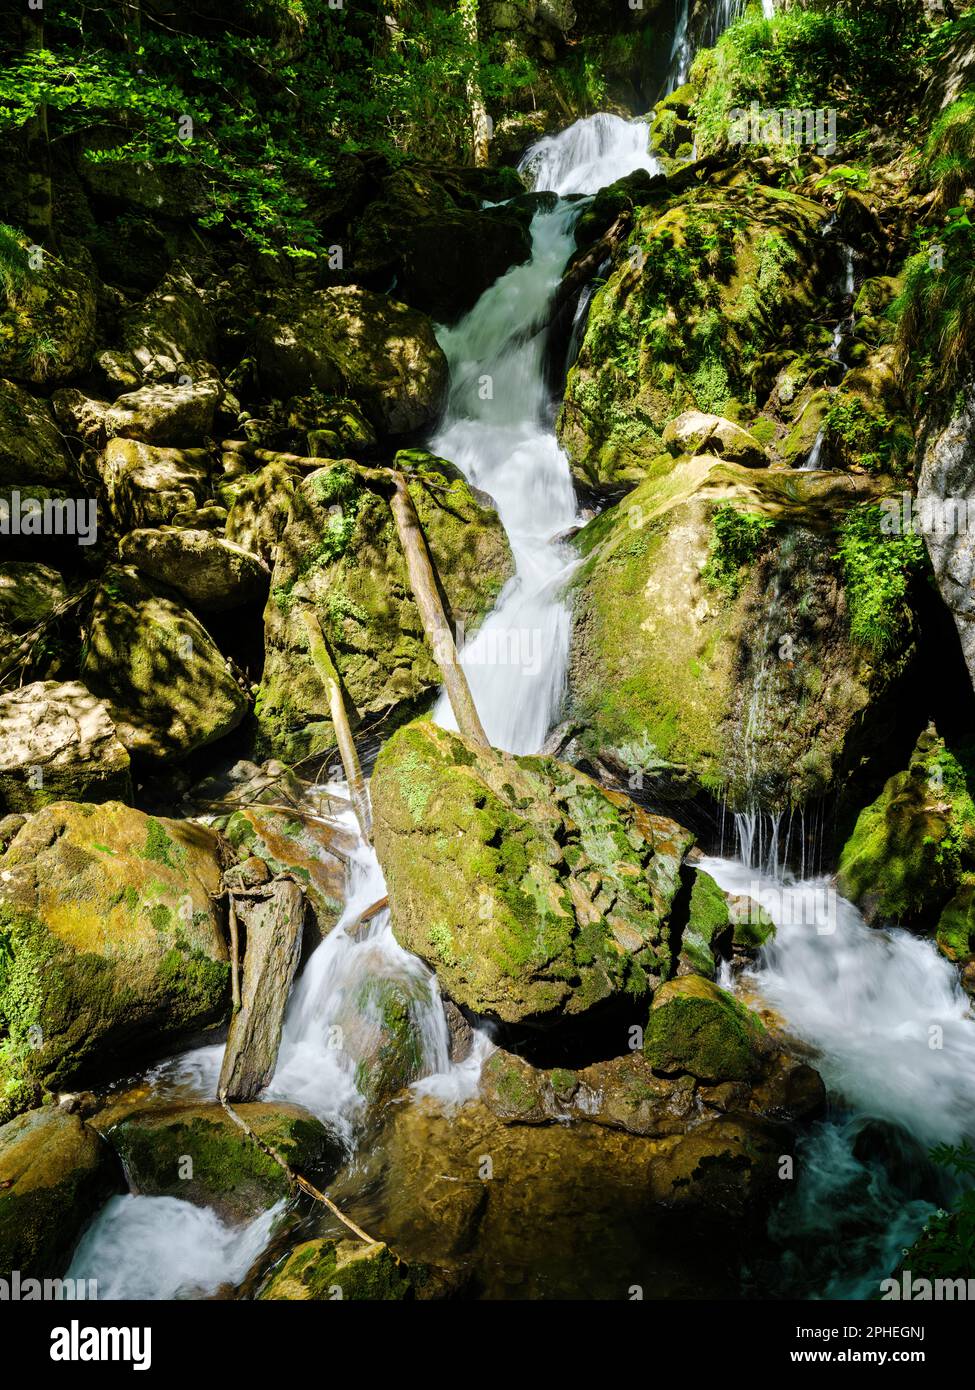 Waterfall Trefflingfall, the longest waterfall in lower Austria. Nature Park Oetscher-Tormaeuer in the Alps of Lower Austria. Europe, Austria, June Stock Photo